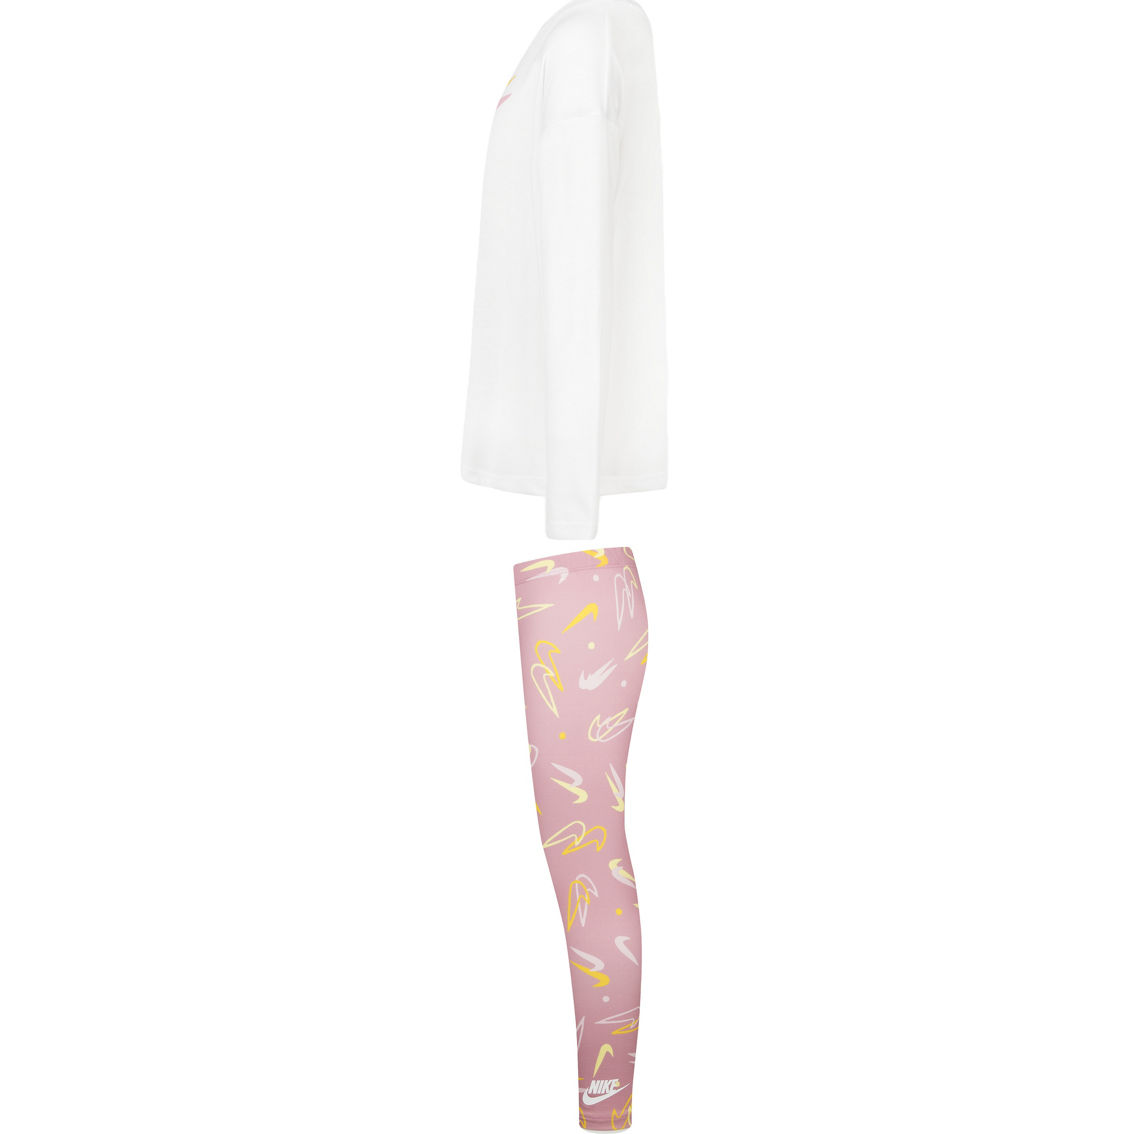 Nike Little Girls Shirt with All Over Print Leggings Set - Image 4 of 7